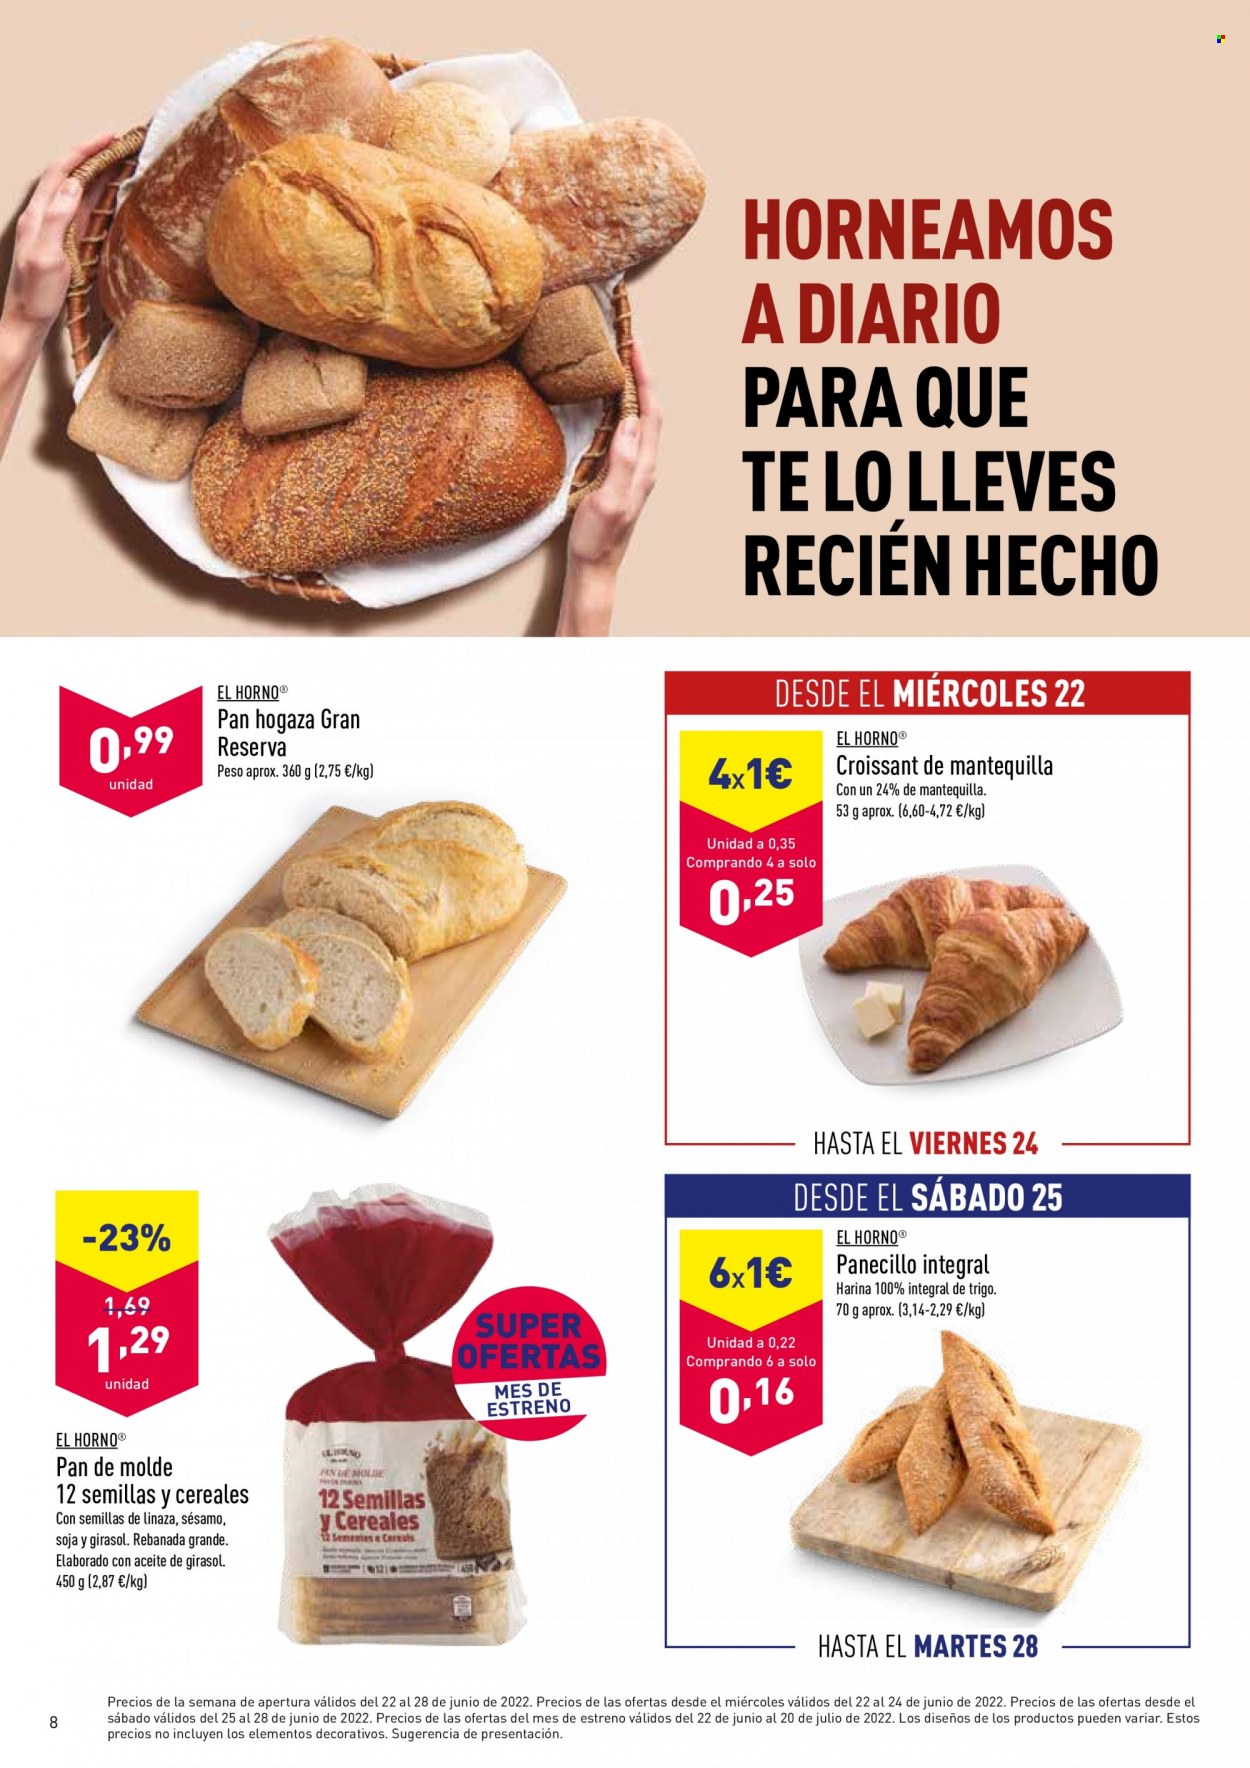 thumbnail - Folleto actual Aldi - 22/06/22 - 28/06/22 - Ventas - pan de molde, panecillo, hogaza, croissant, Gran Reserva, harina. Página 8.